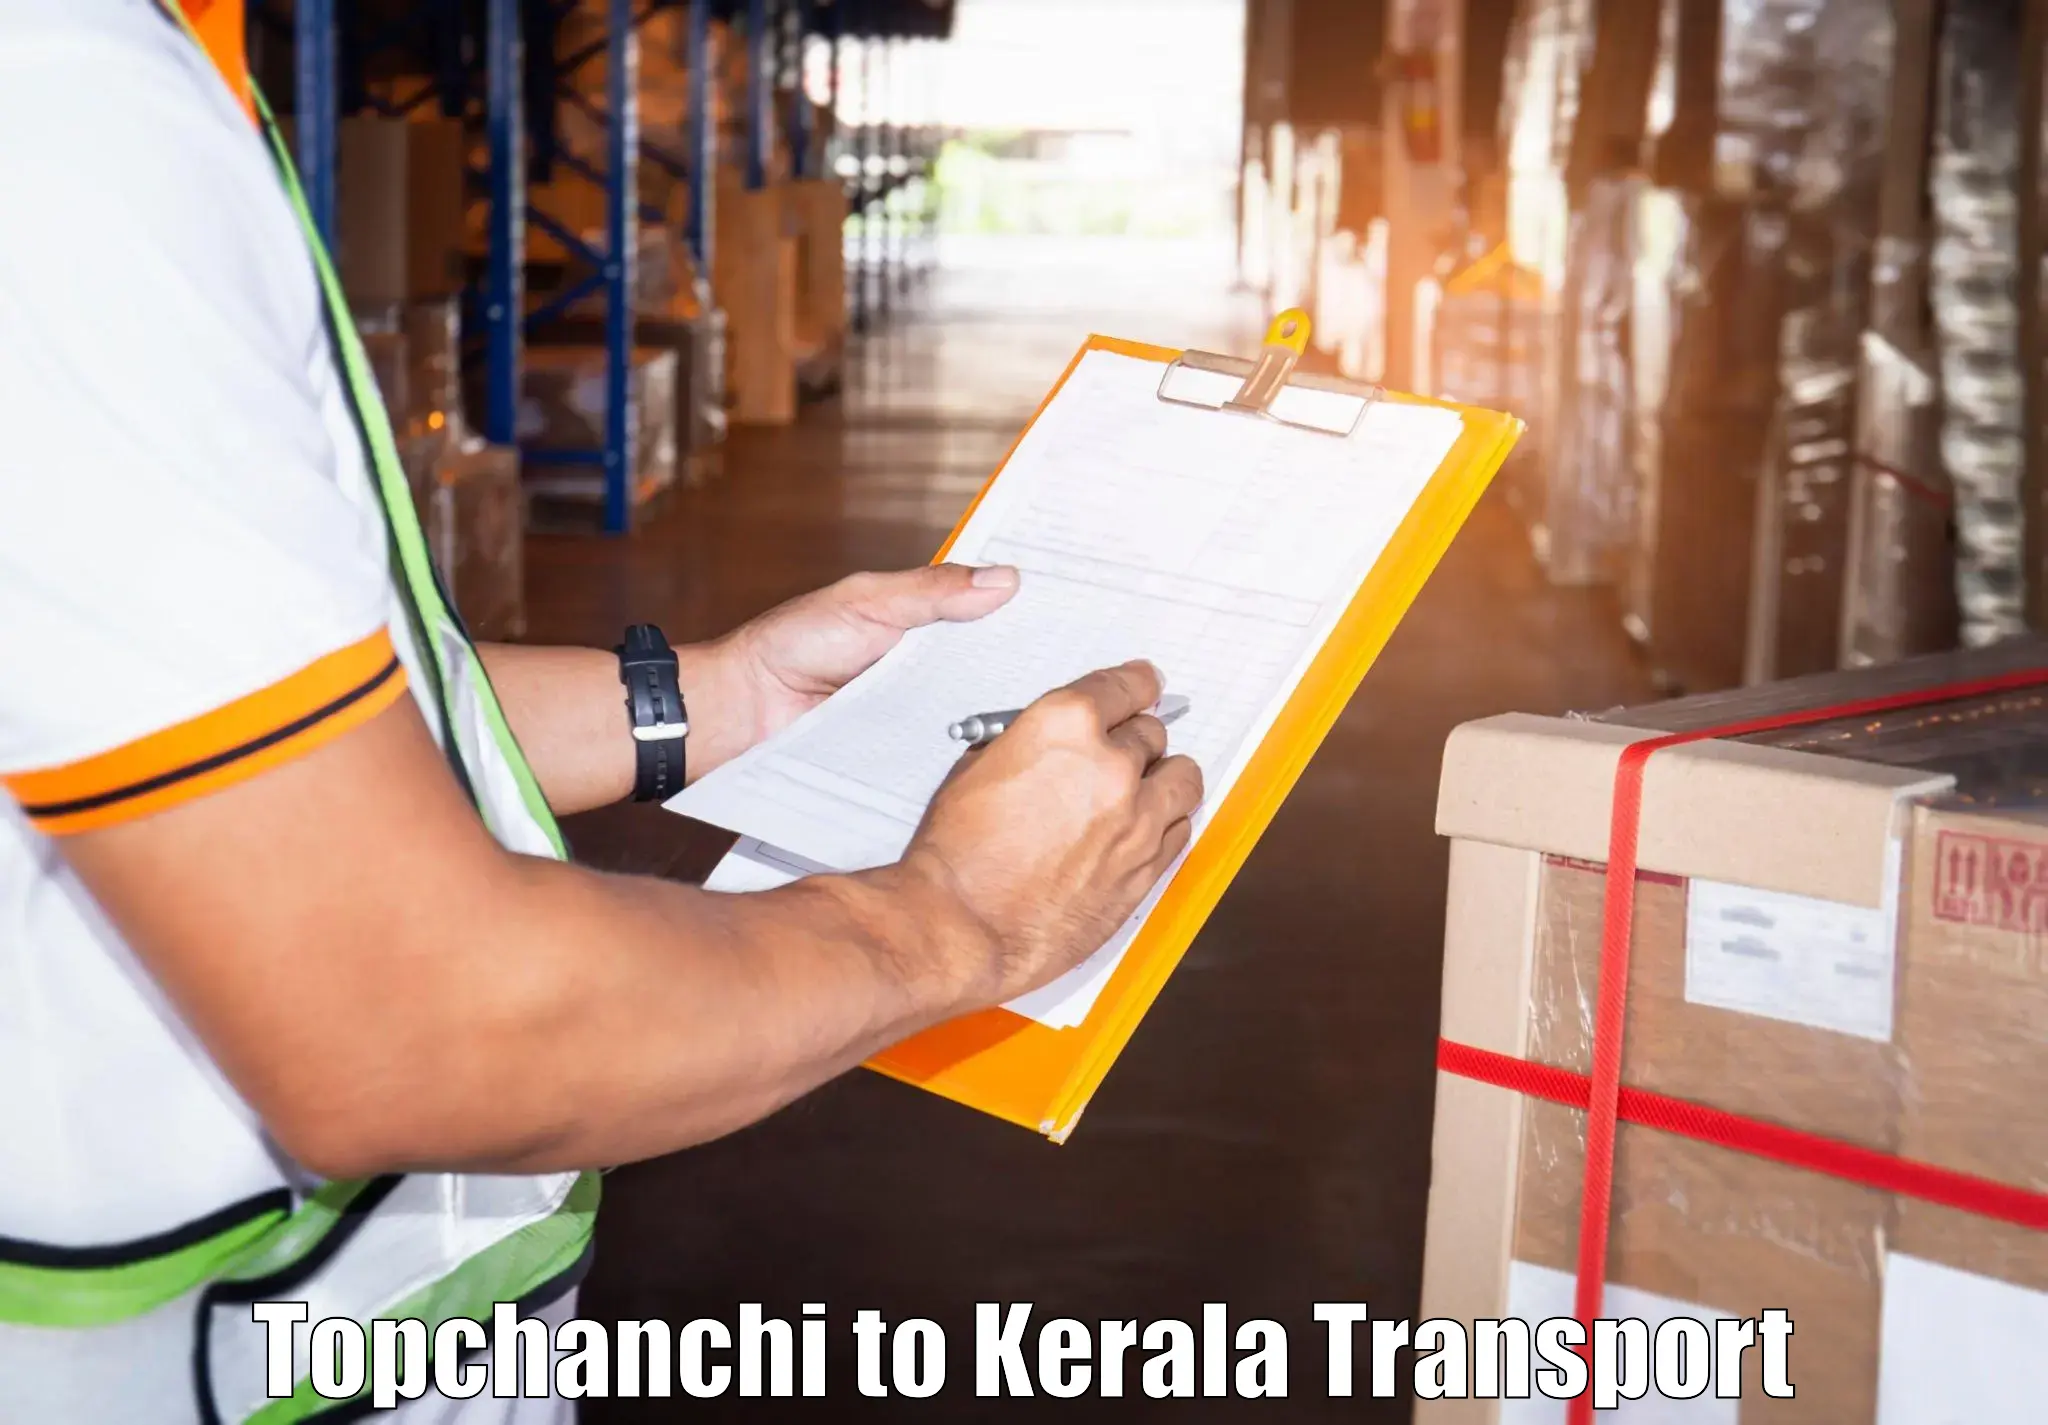 Shipping partner Topchanchi to Trivandrum